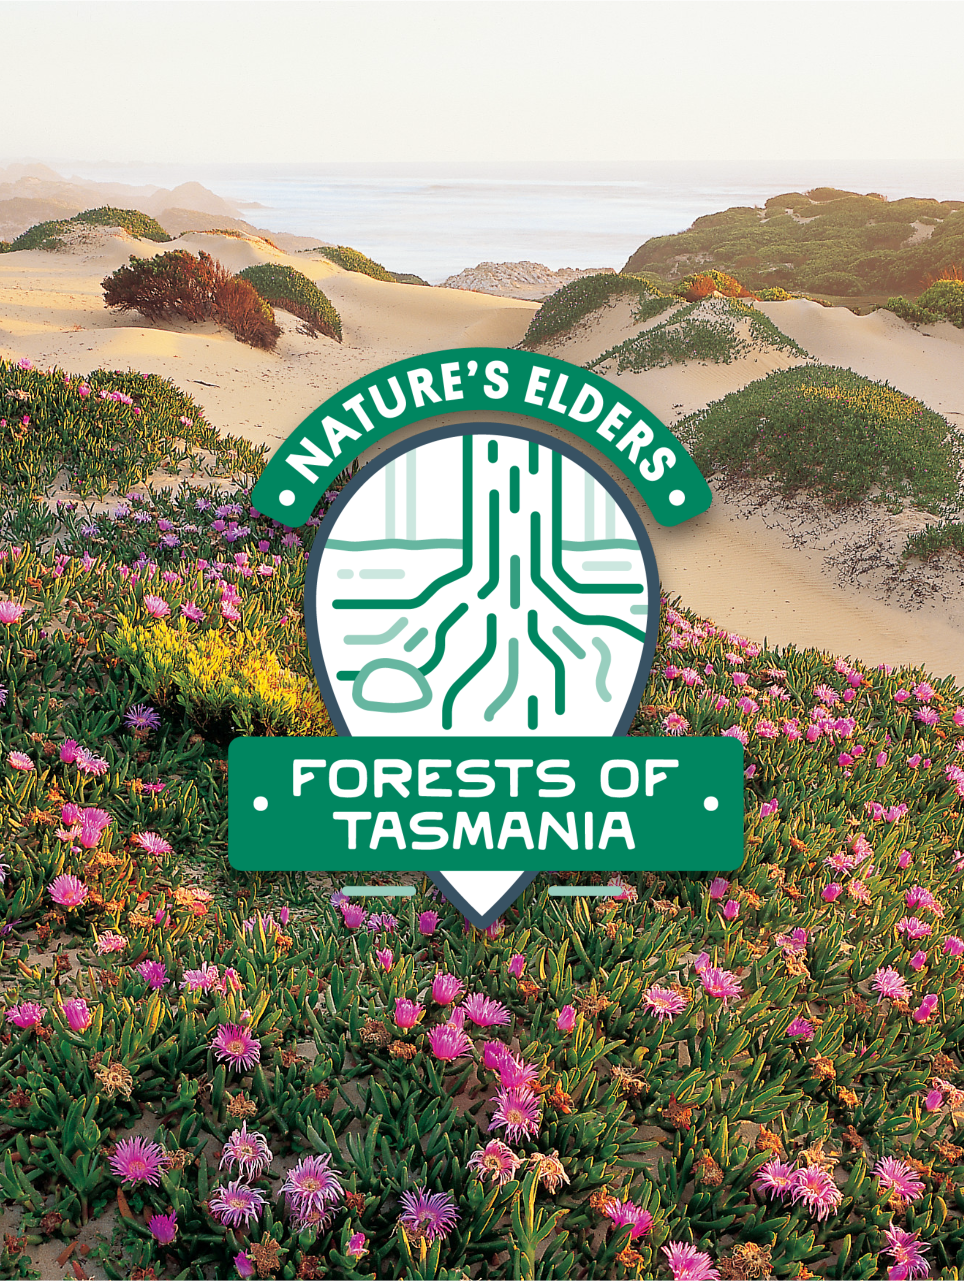 Forest of tasmania logo